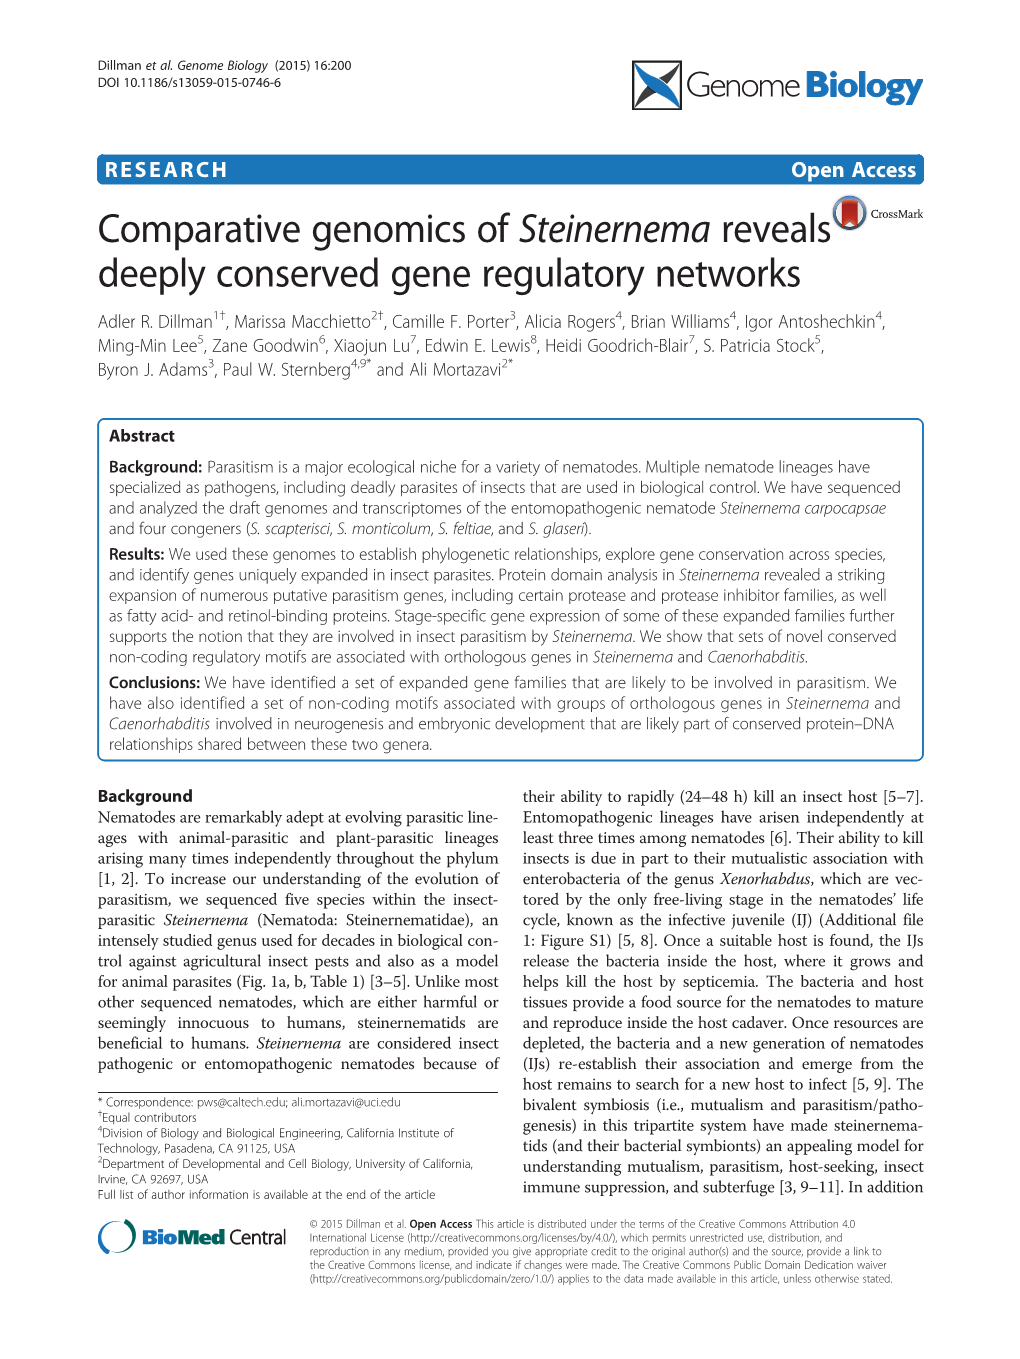 Comparative Genomics of Steinernema Reveals Deeply Conserved Gene Regulatory Networks Adler R